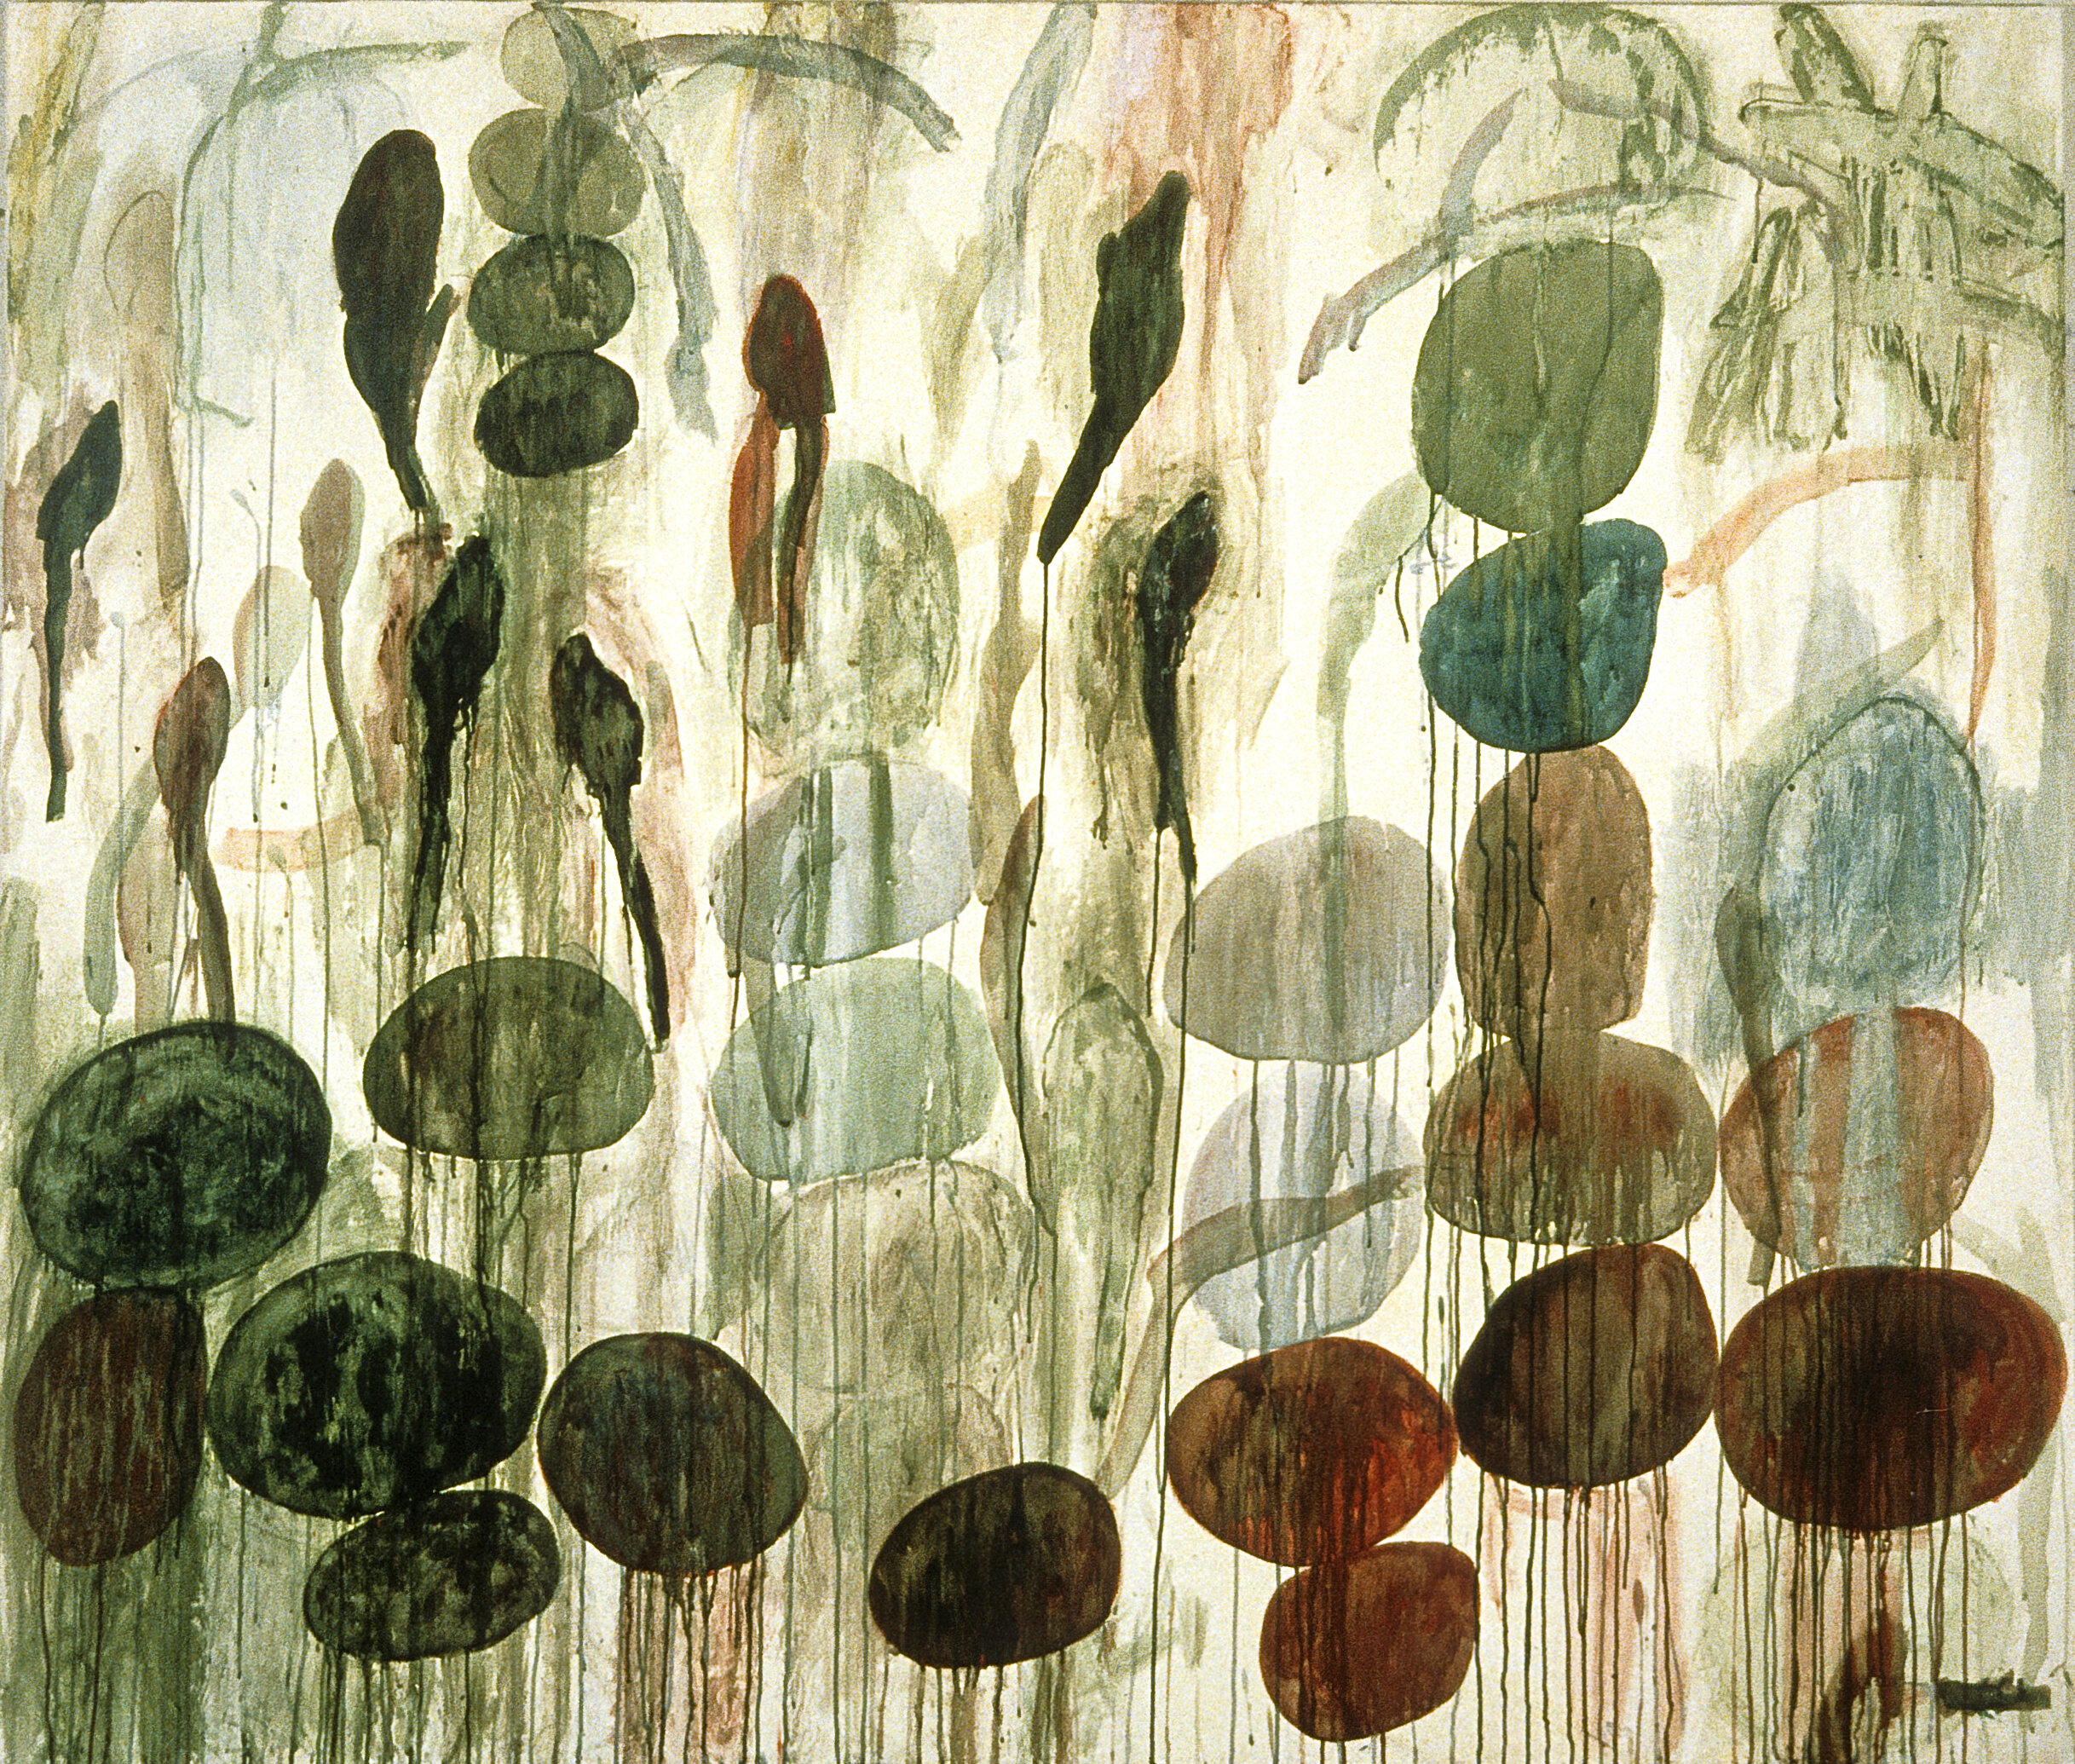   Stones of Winter II , 1988-89, acrylic, vellum on canvas, 6 x 7 feet   